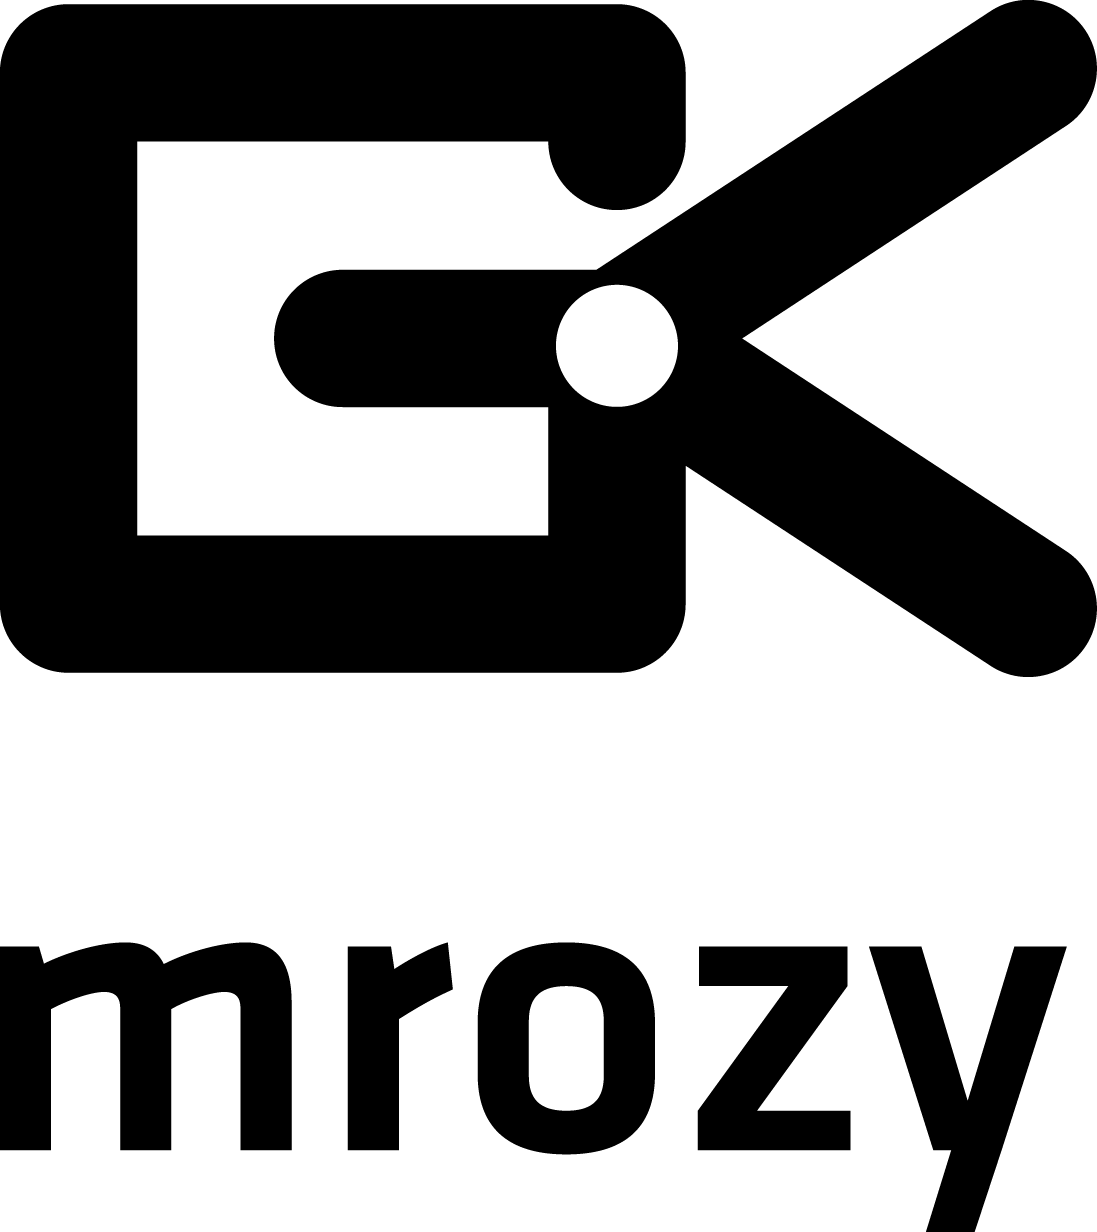 GCK Mrozy logo skrót mono